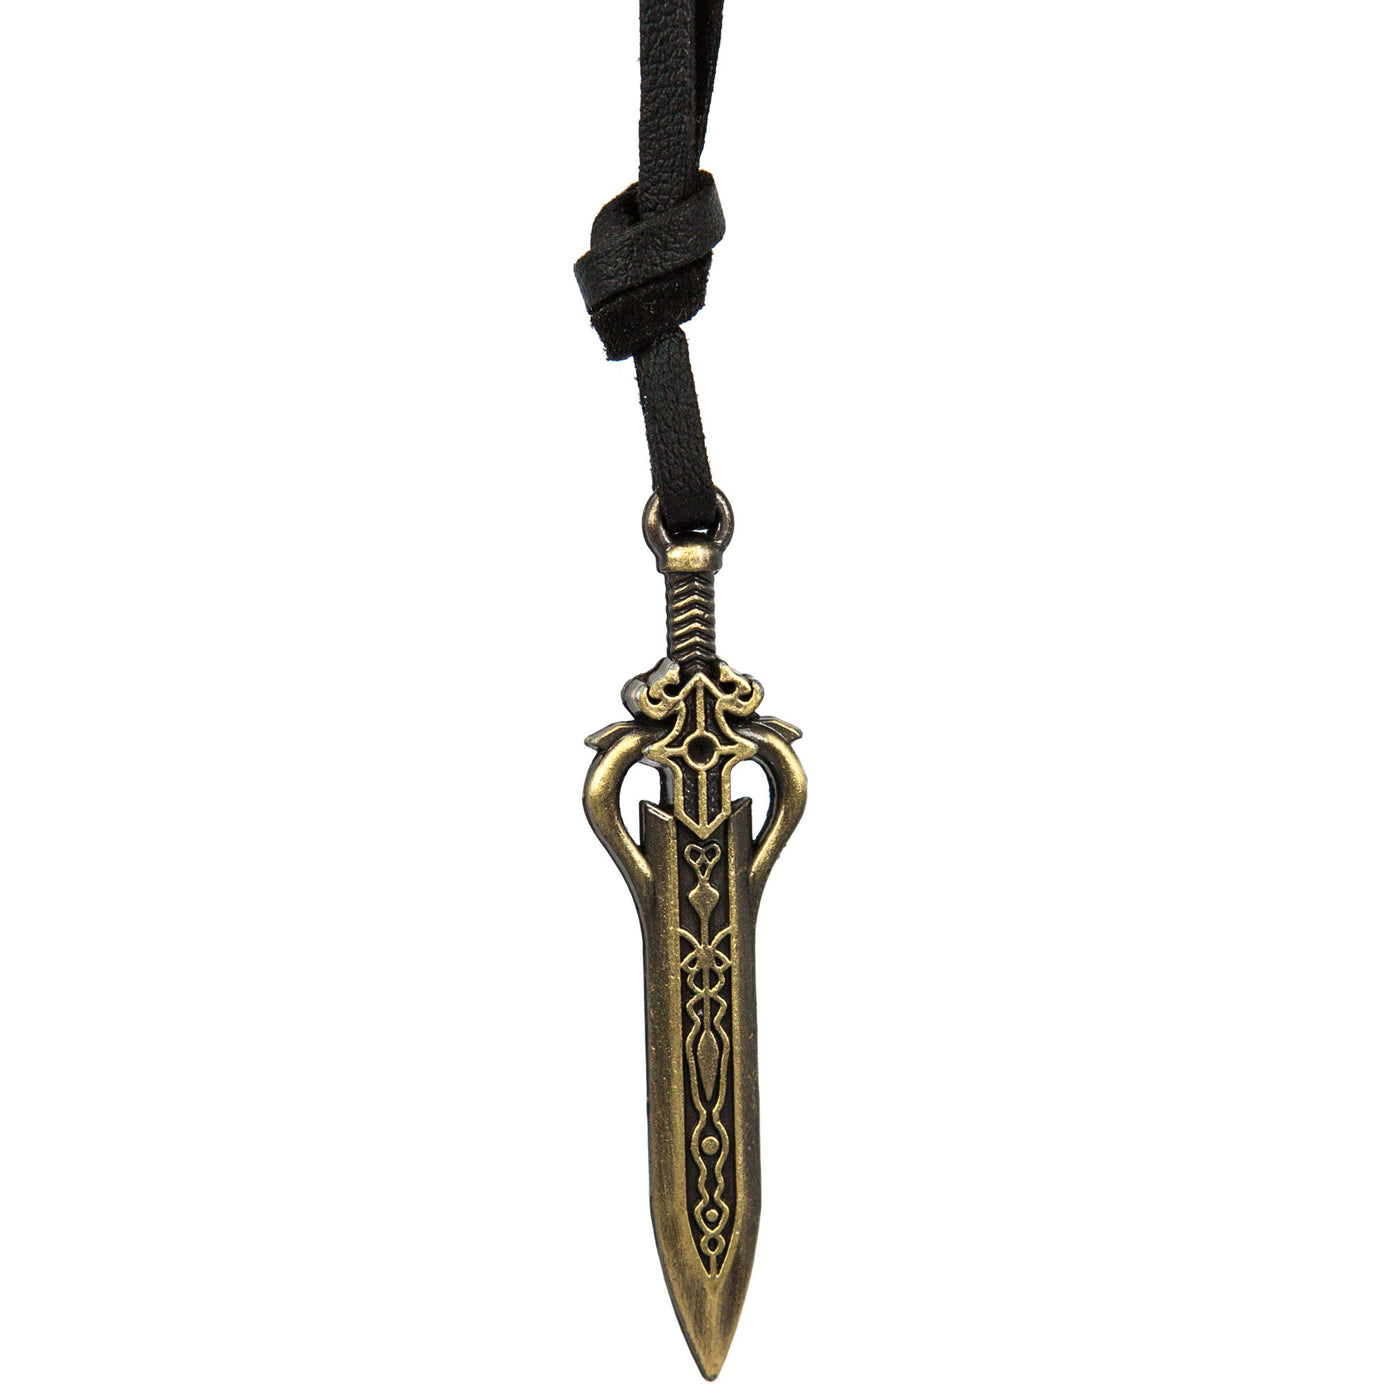 Sword pendant